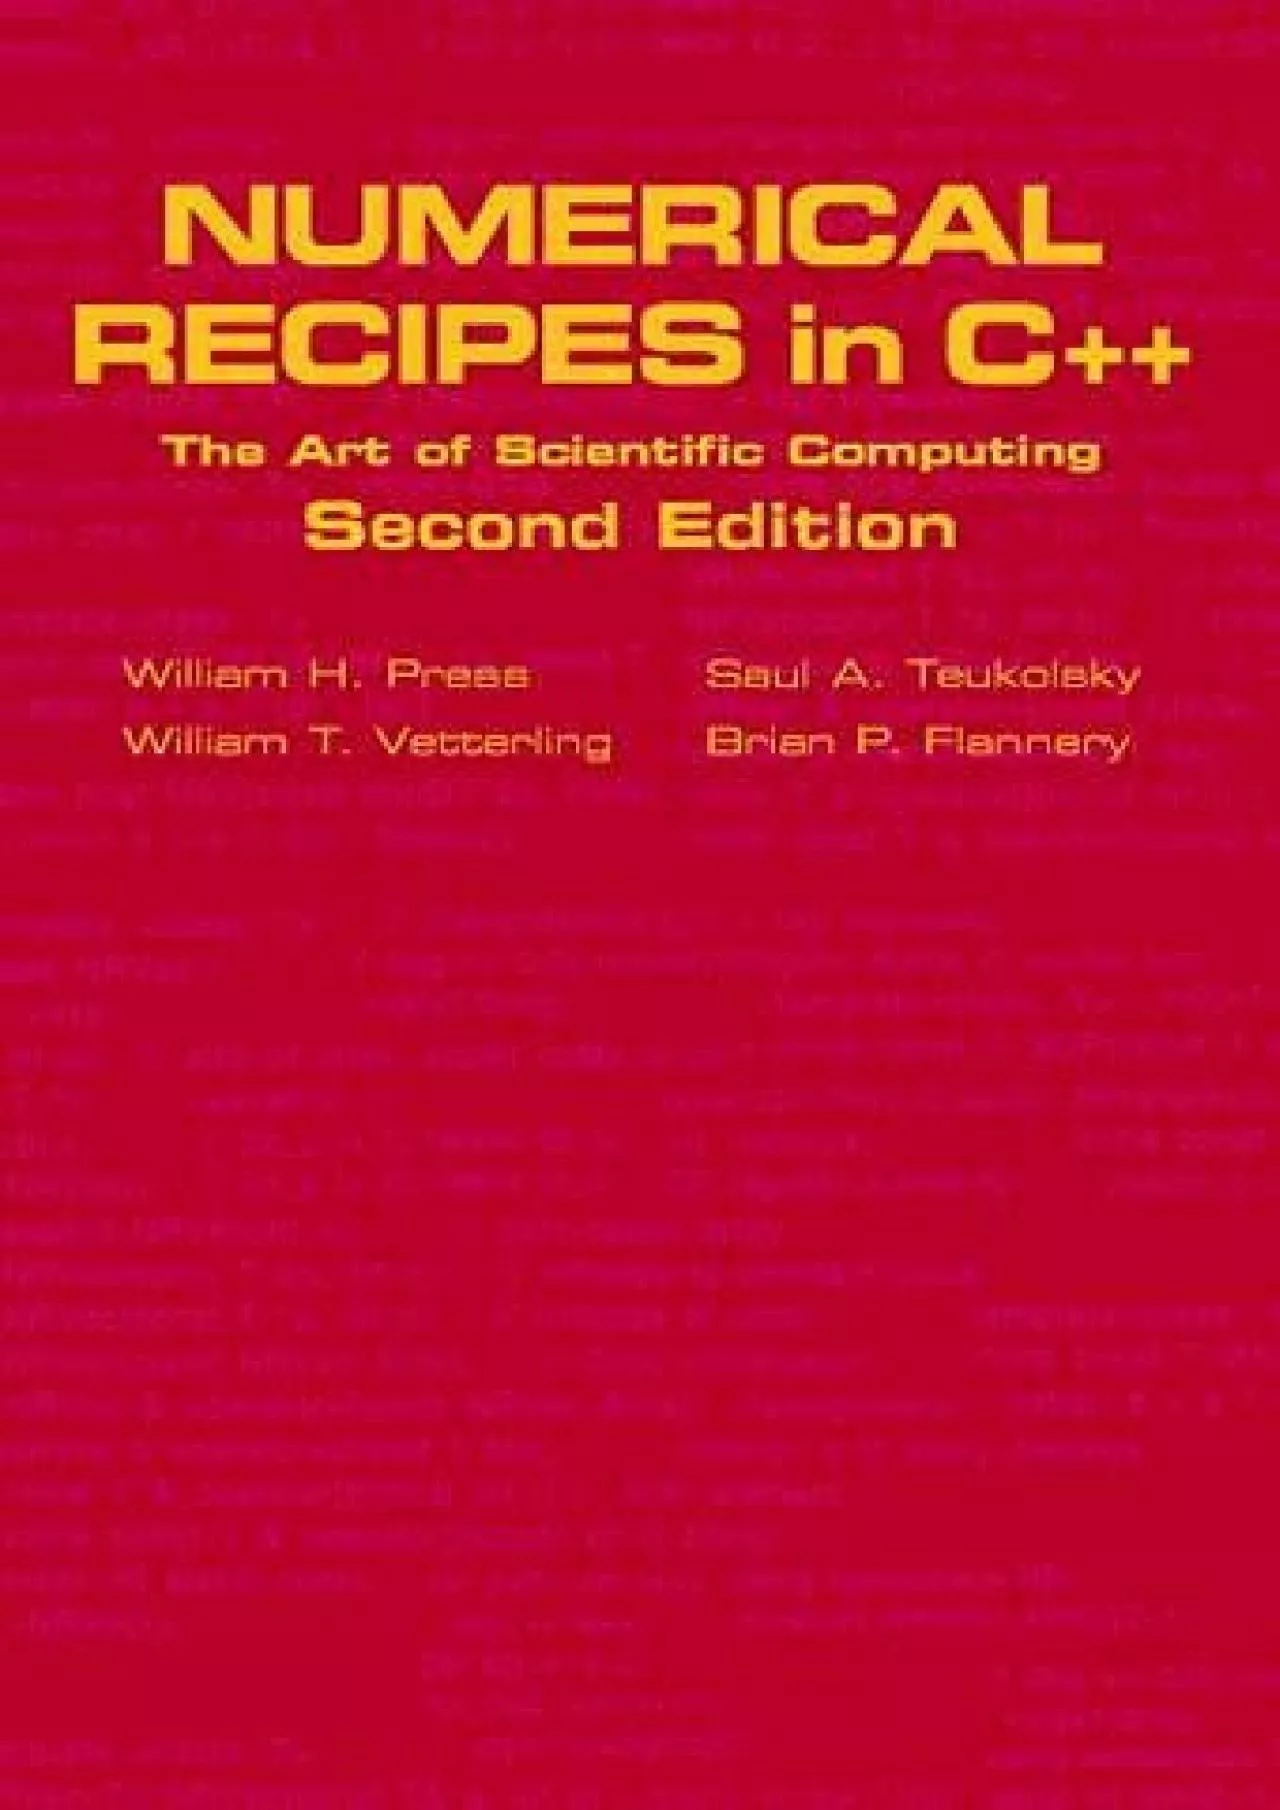 [READING BOOK]-Numerical Recipes in C++: The Art of Scientific Computing